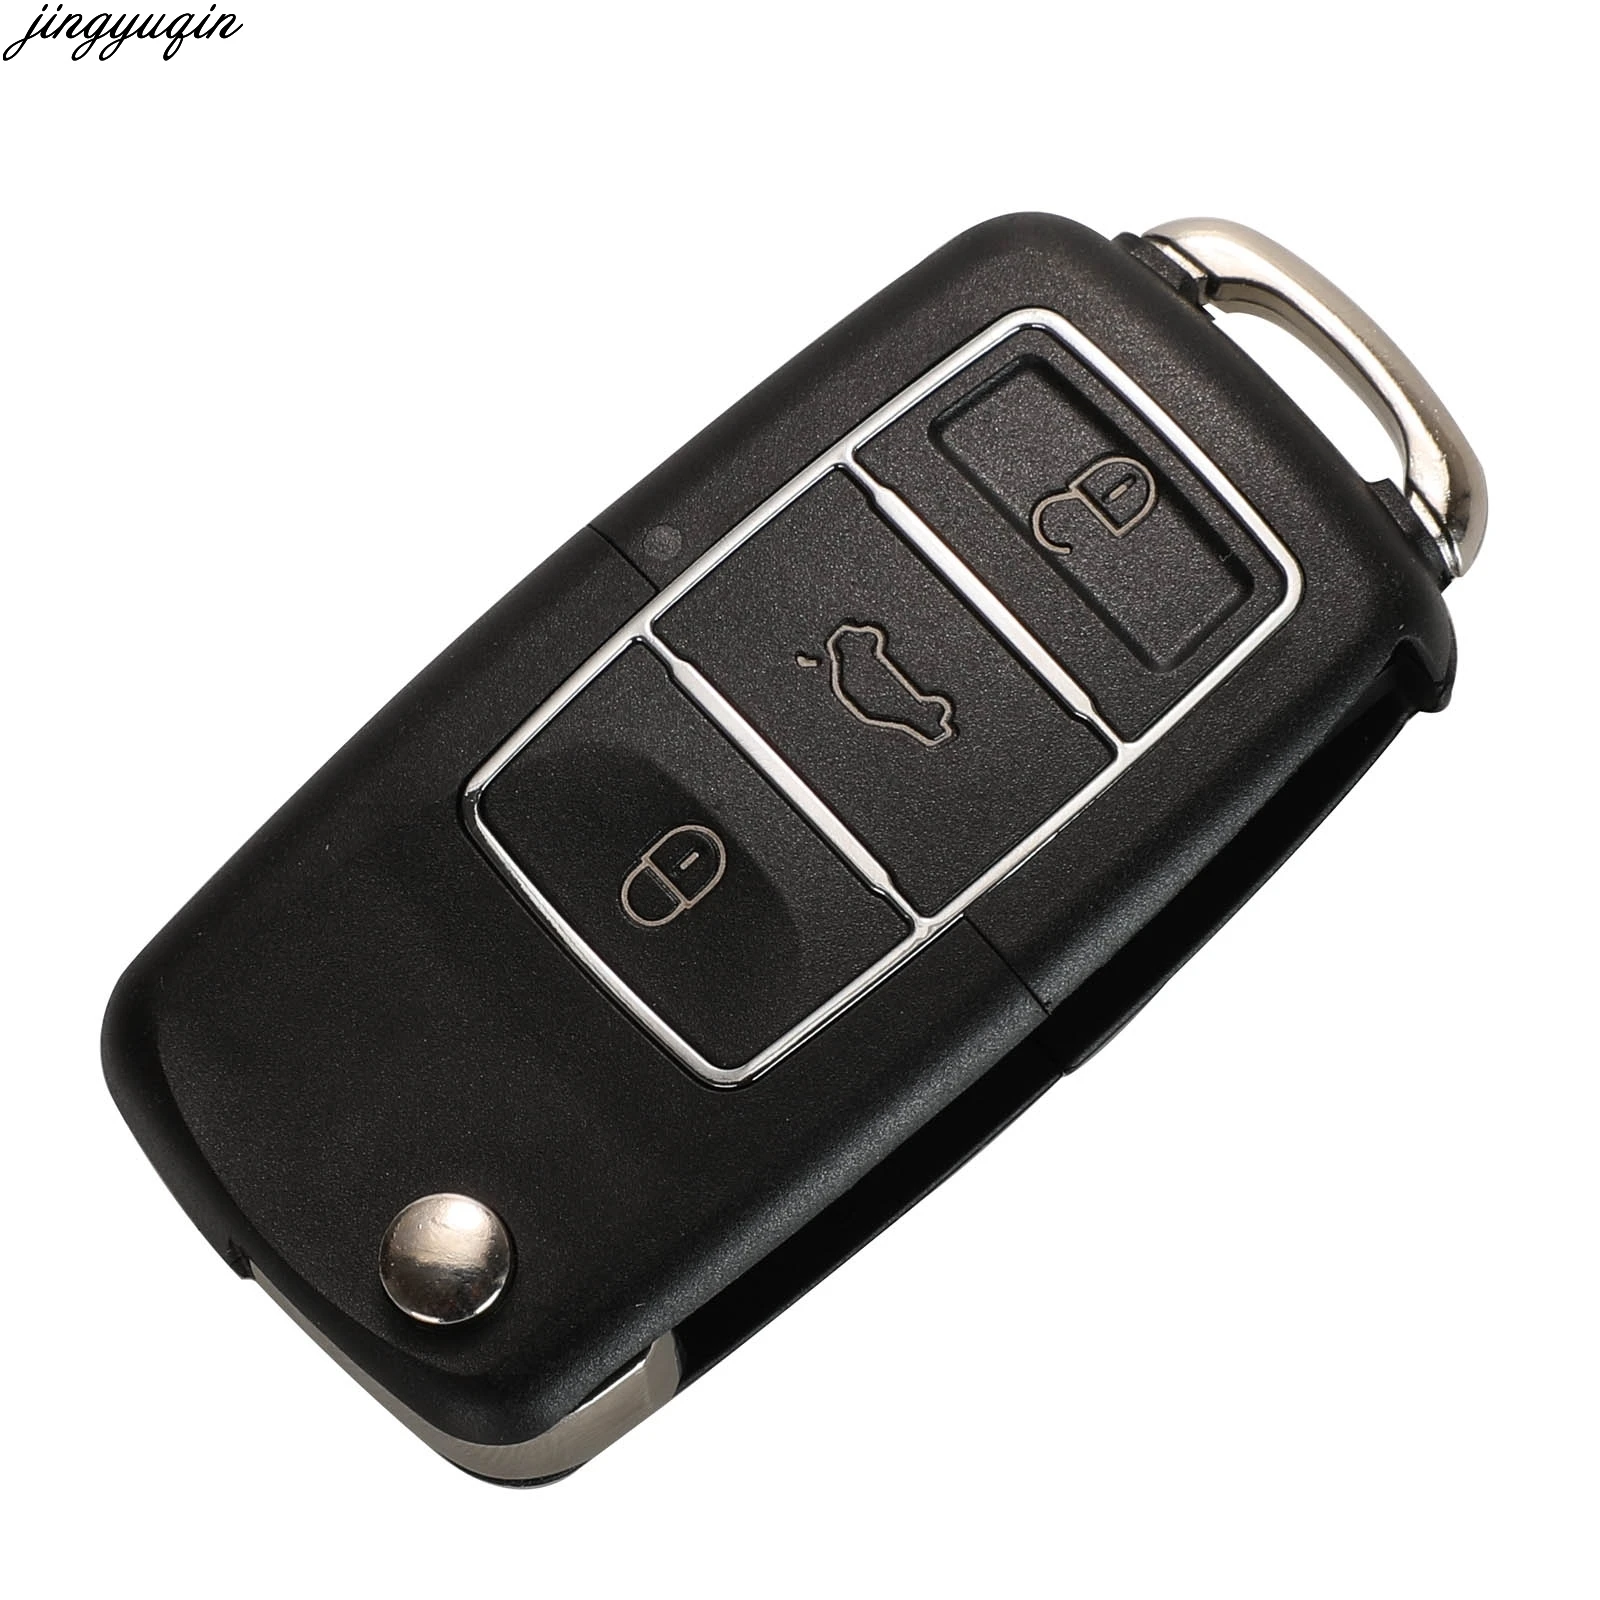 

Jingyuqin Flip Remote Car Key Case Shell For Volkswagen Vw Jetta Golf Passat Beetle Skoda Seat Polo B5 3 Buttons Folding Fob